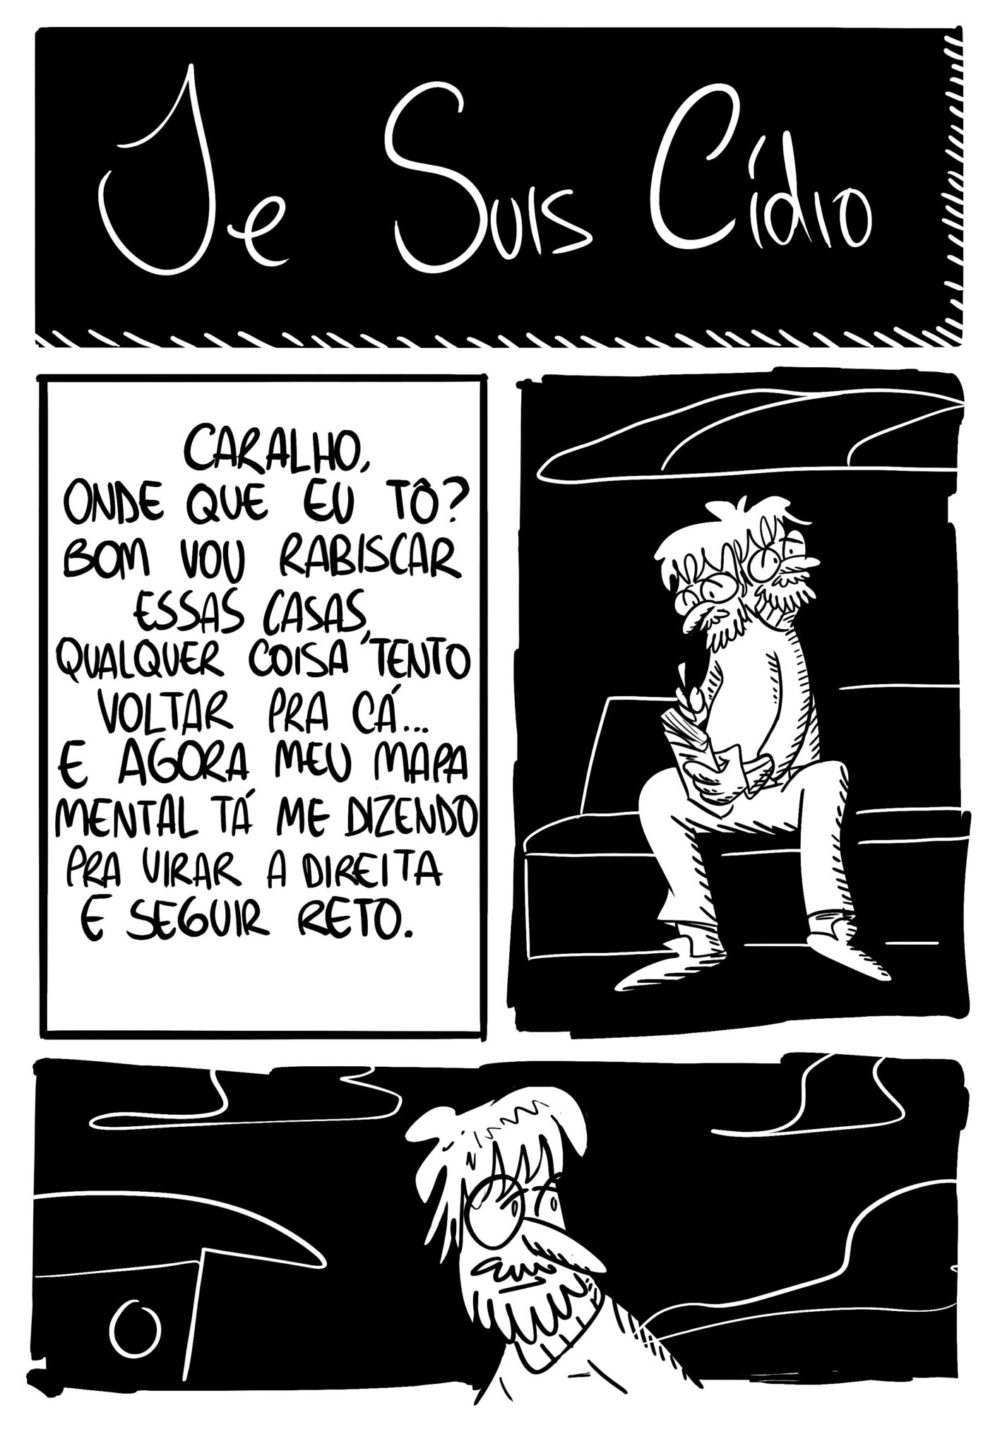 Je Suis Cídio #12, por João B. Godoi